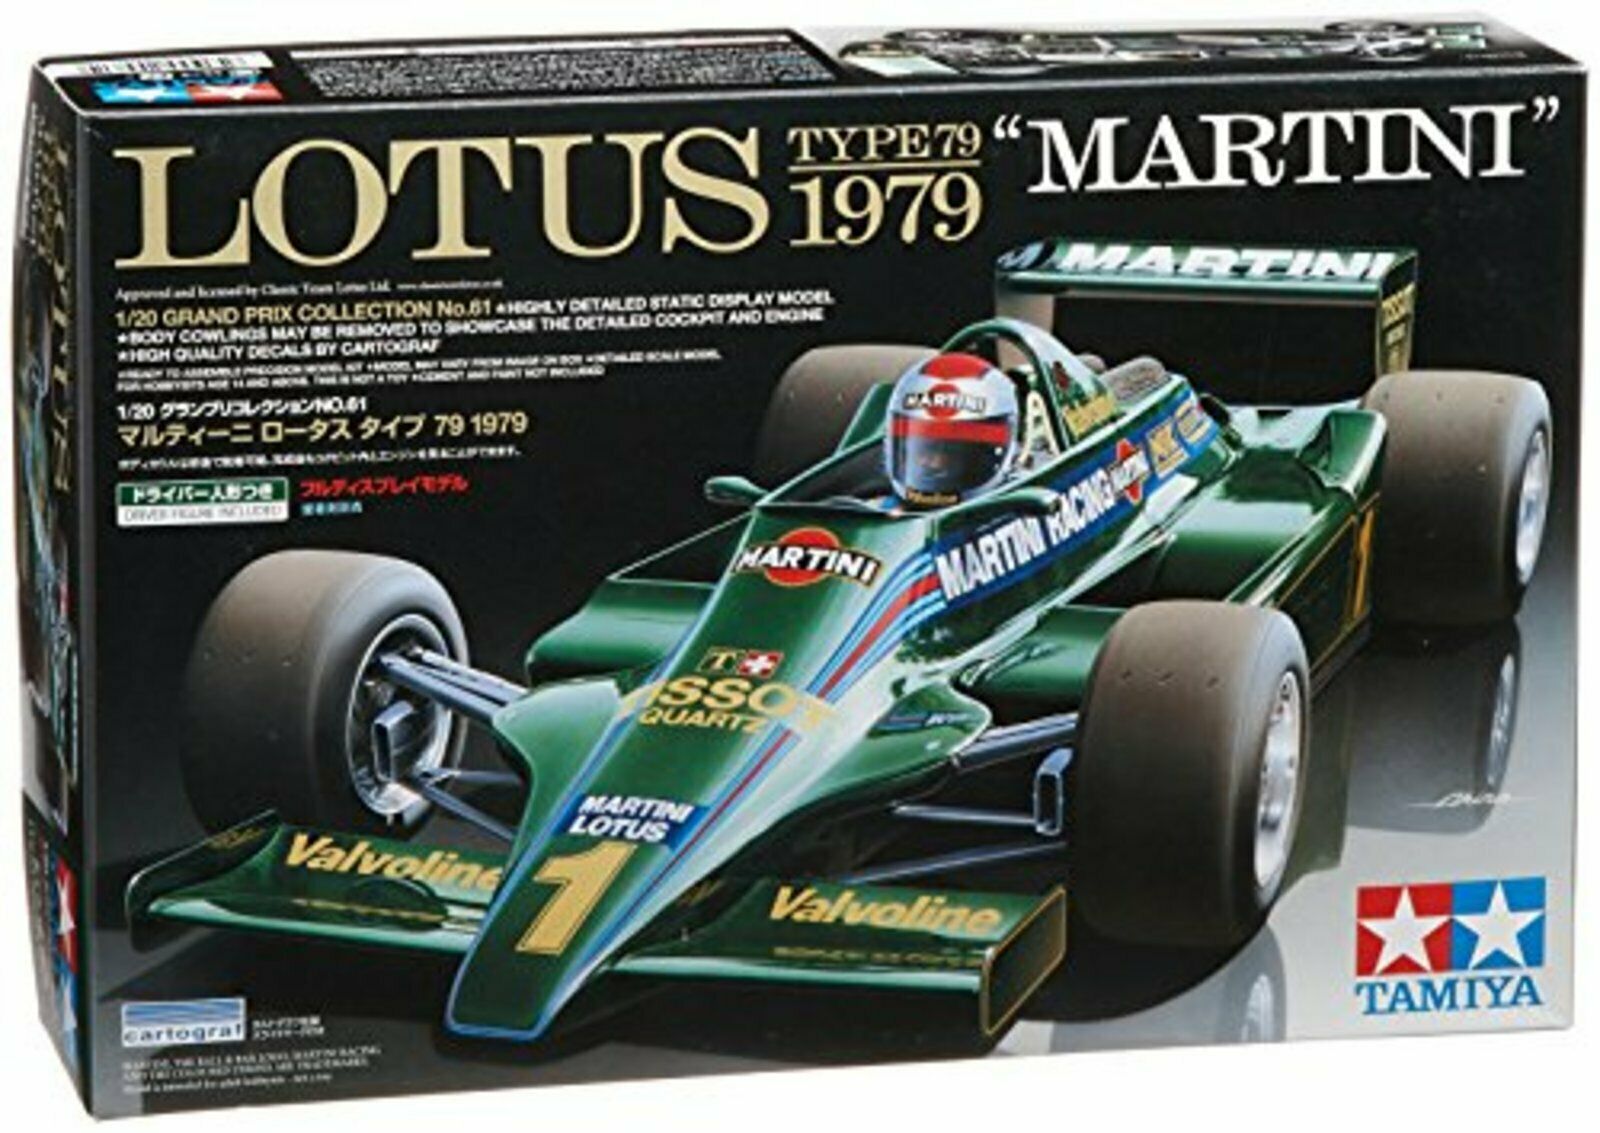 TAMIYA 20061 1/20 Grand Prix Collection No.61 Martini Lotus 79 1979